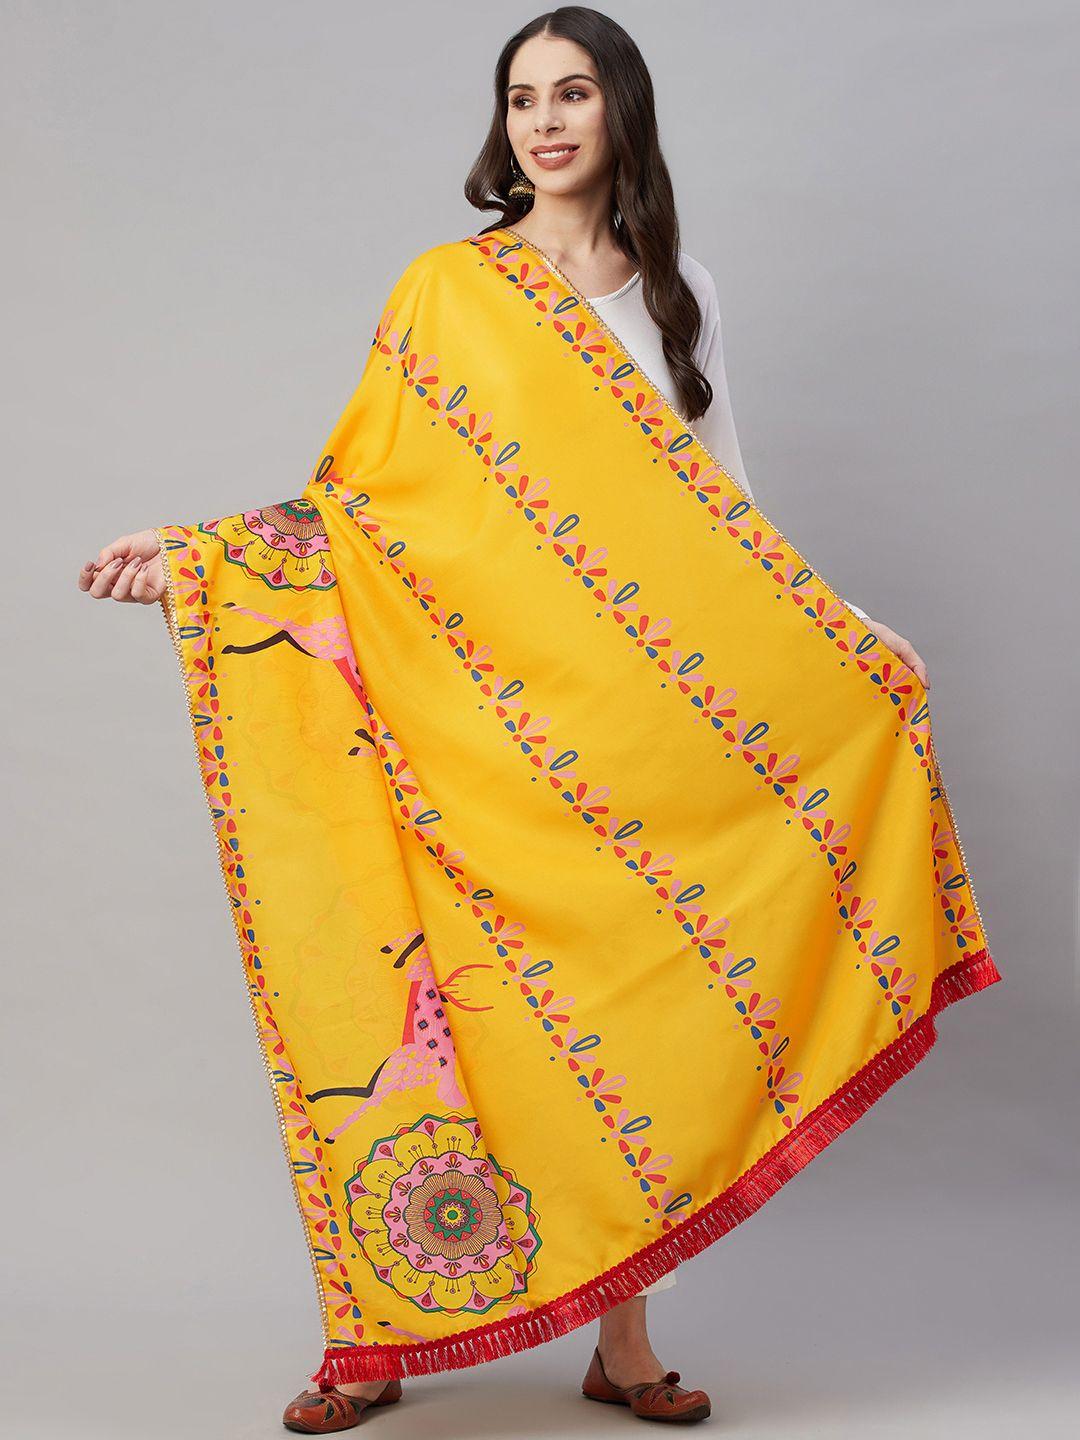 yellow-parrot-yellow-&-pink-ethnic-motifs-printed-dupatta